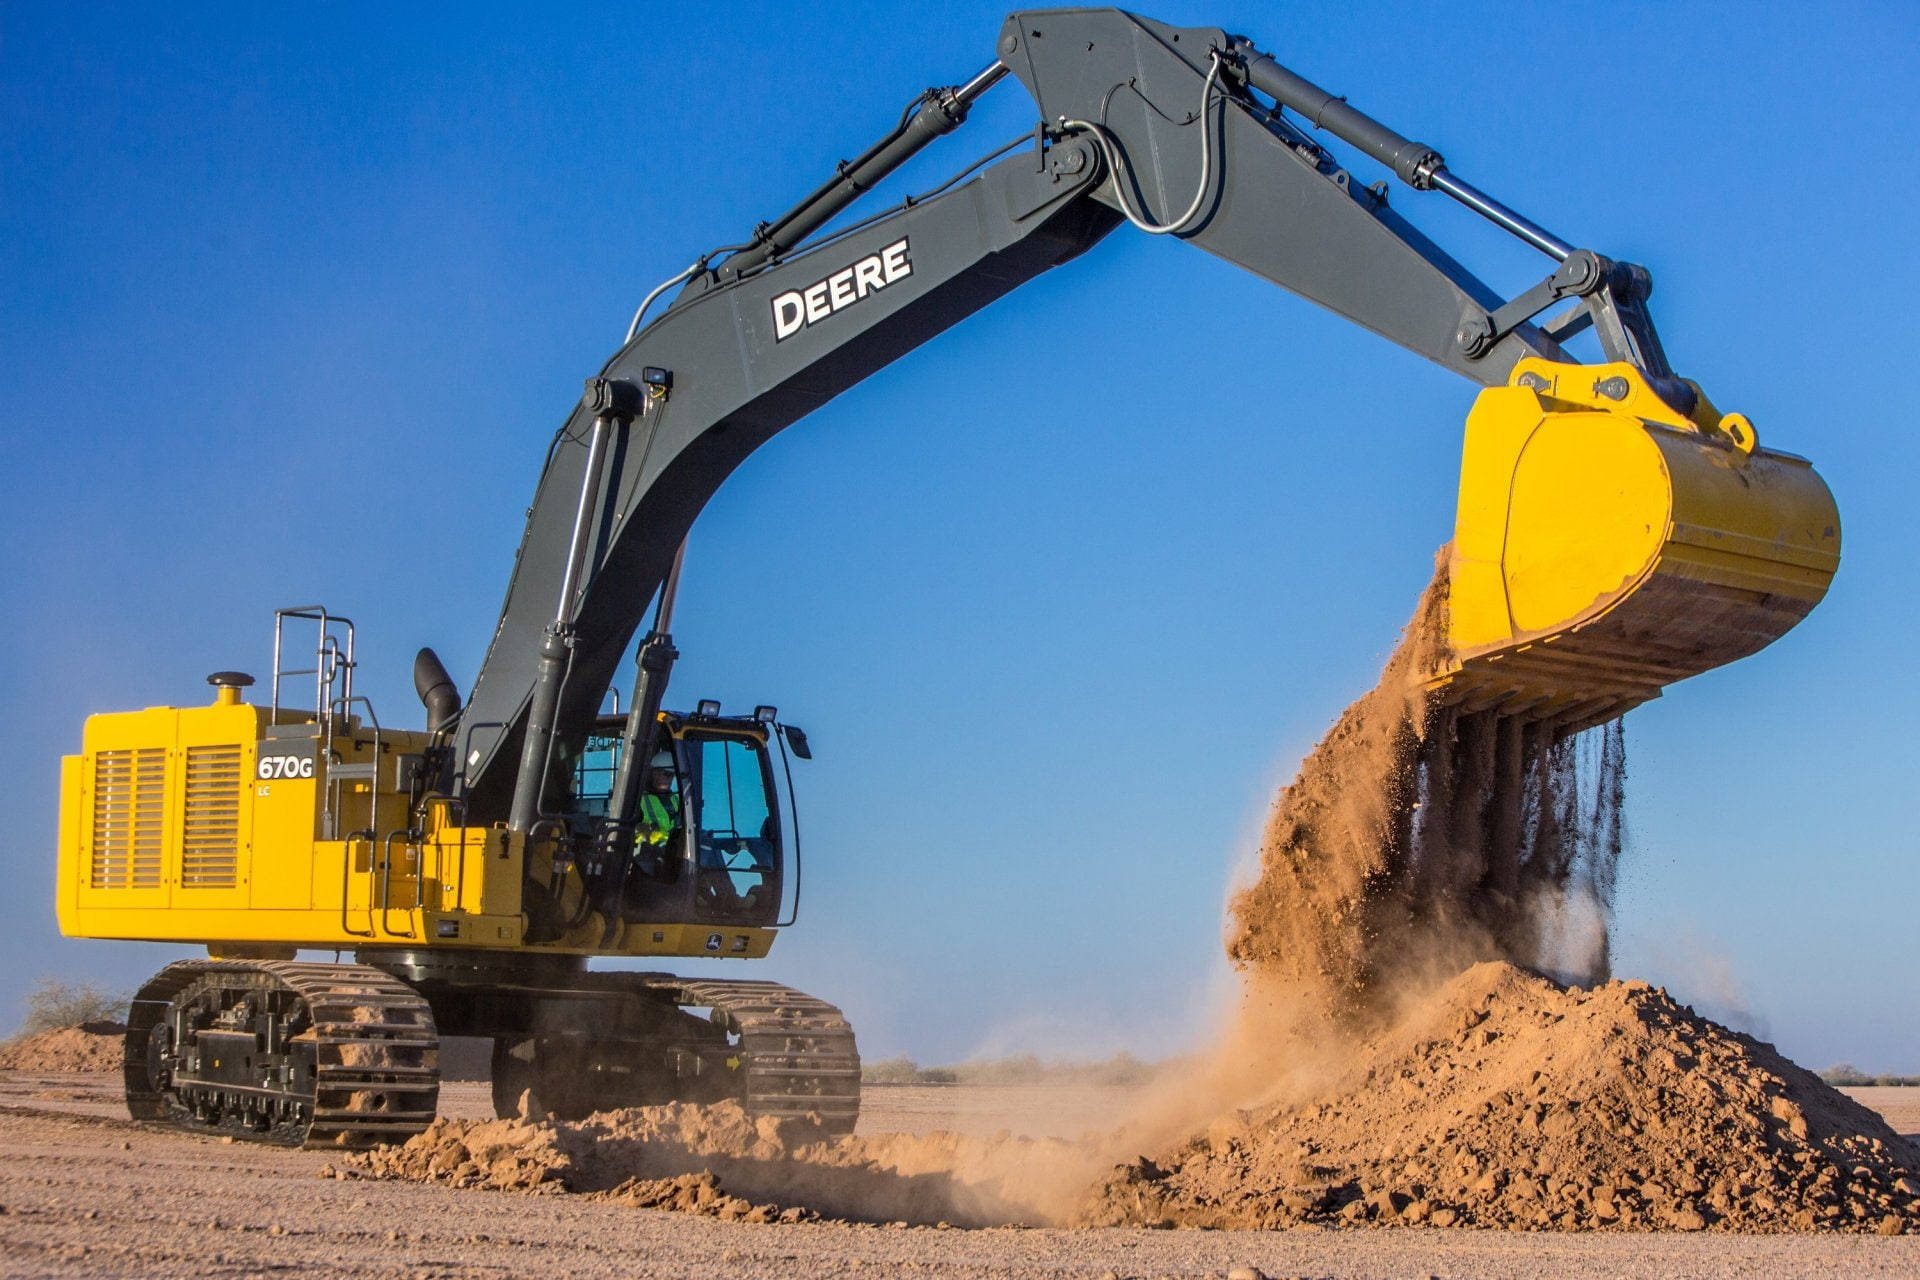 Large John Deere Excavator In Action Background